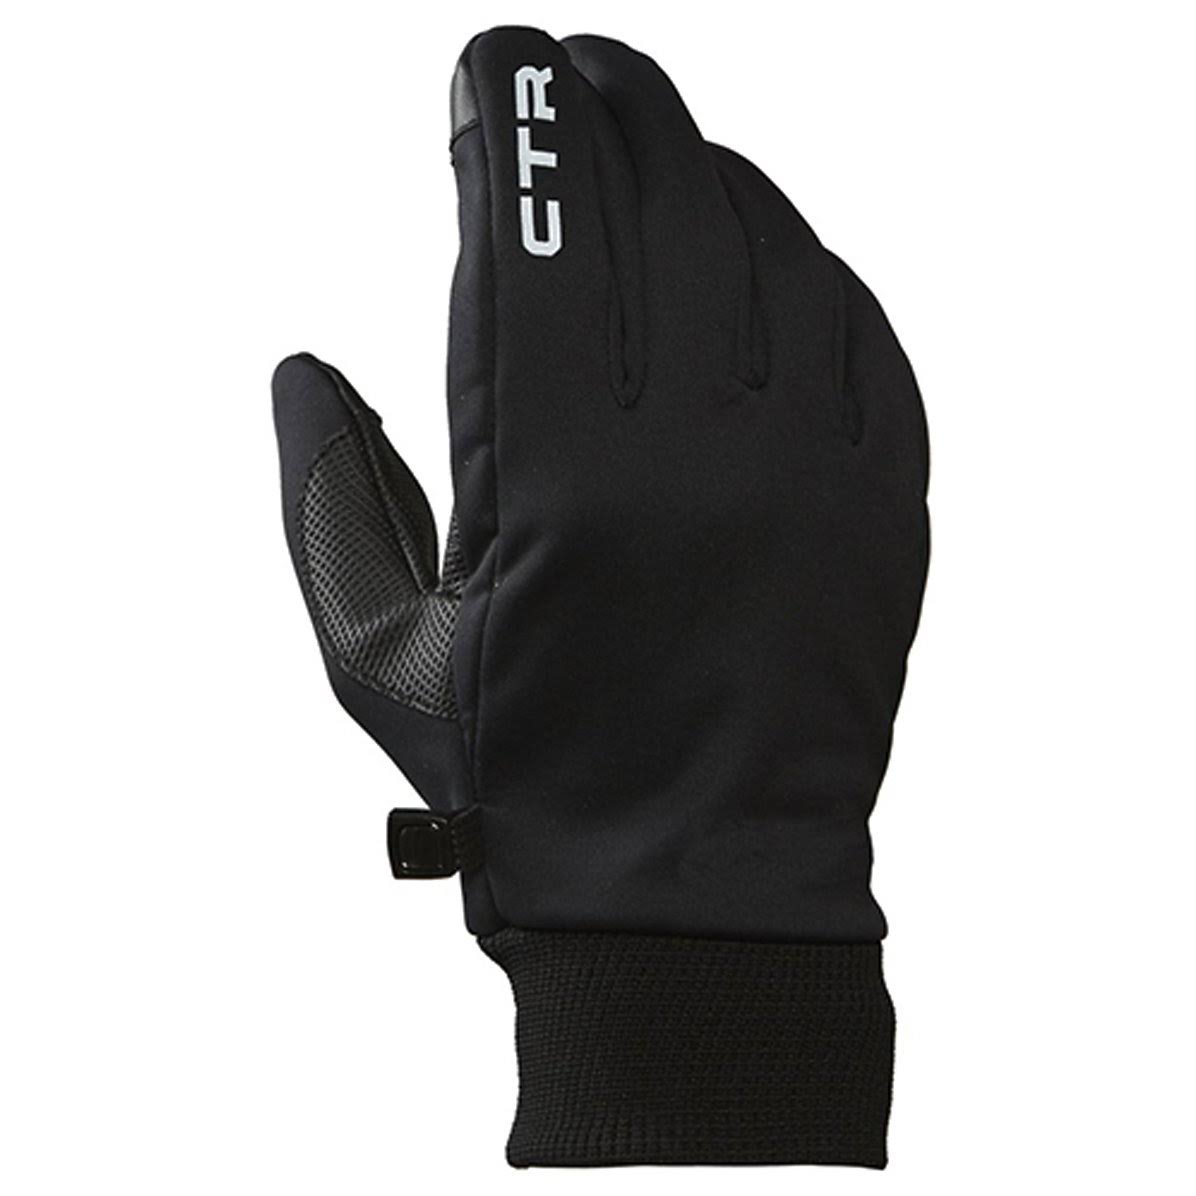 CTR Glacier Air Protect Glove Black/Silver Smart Touch / L